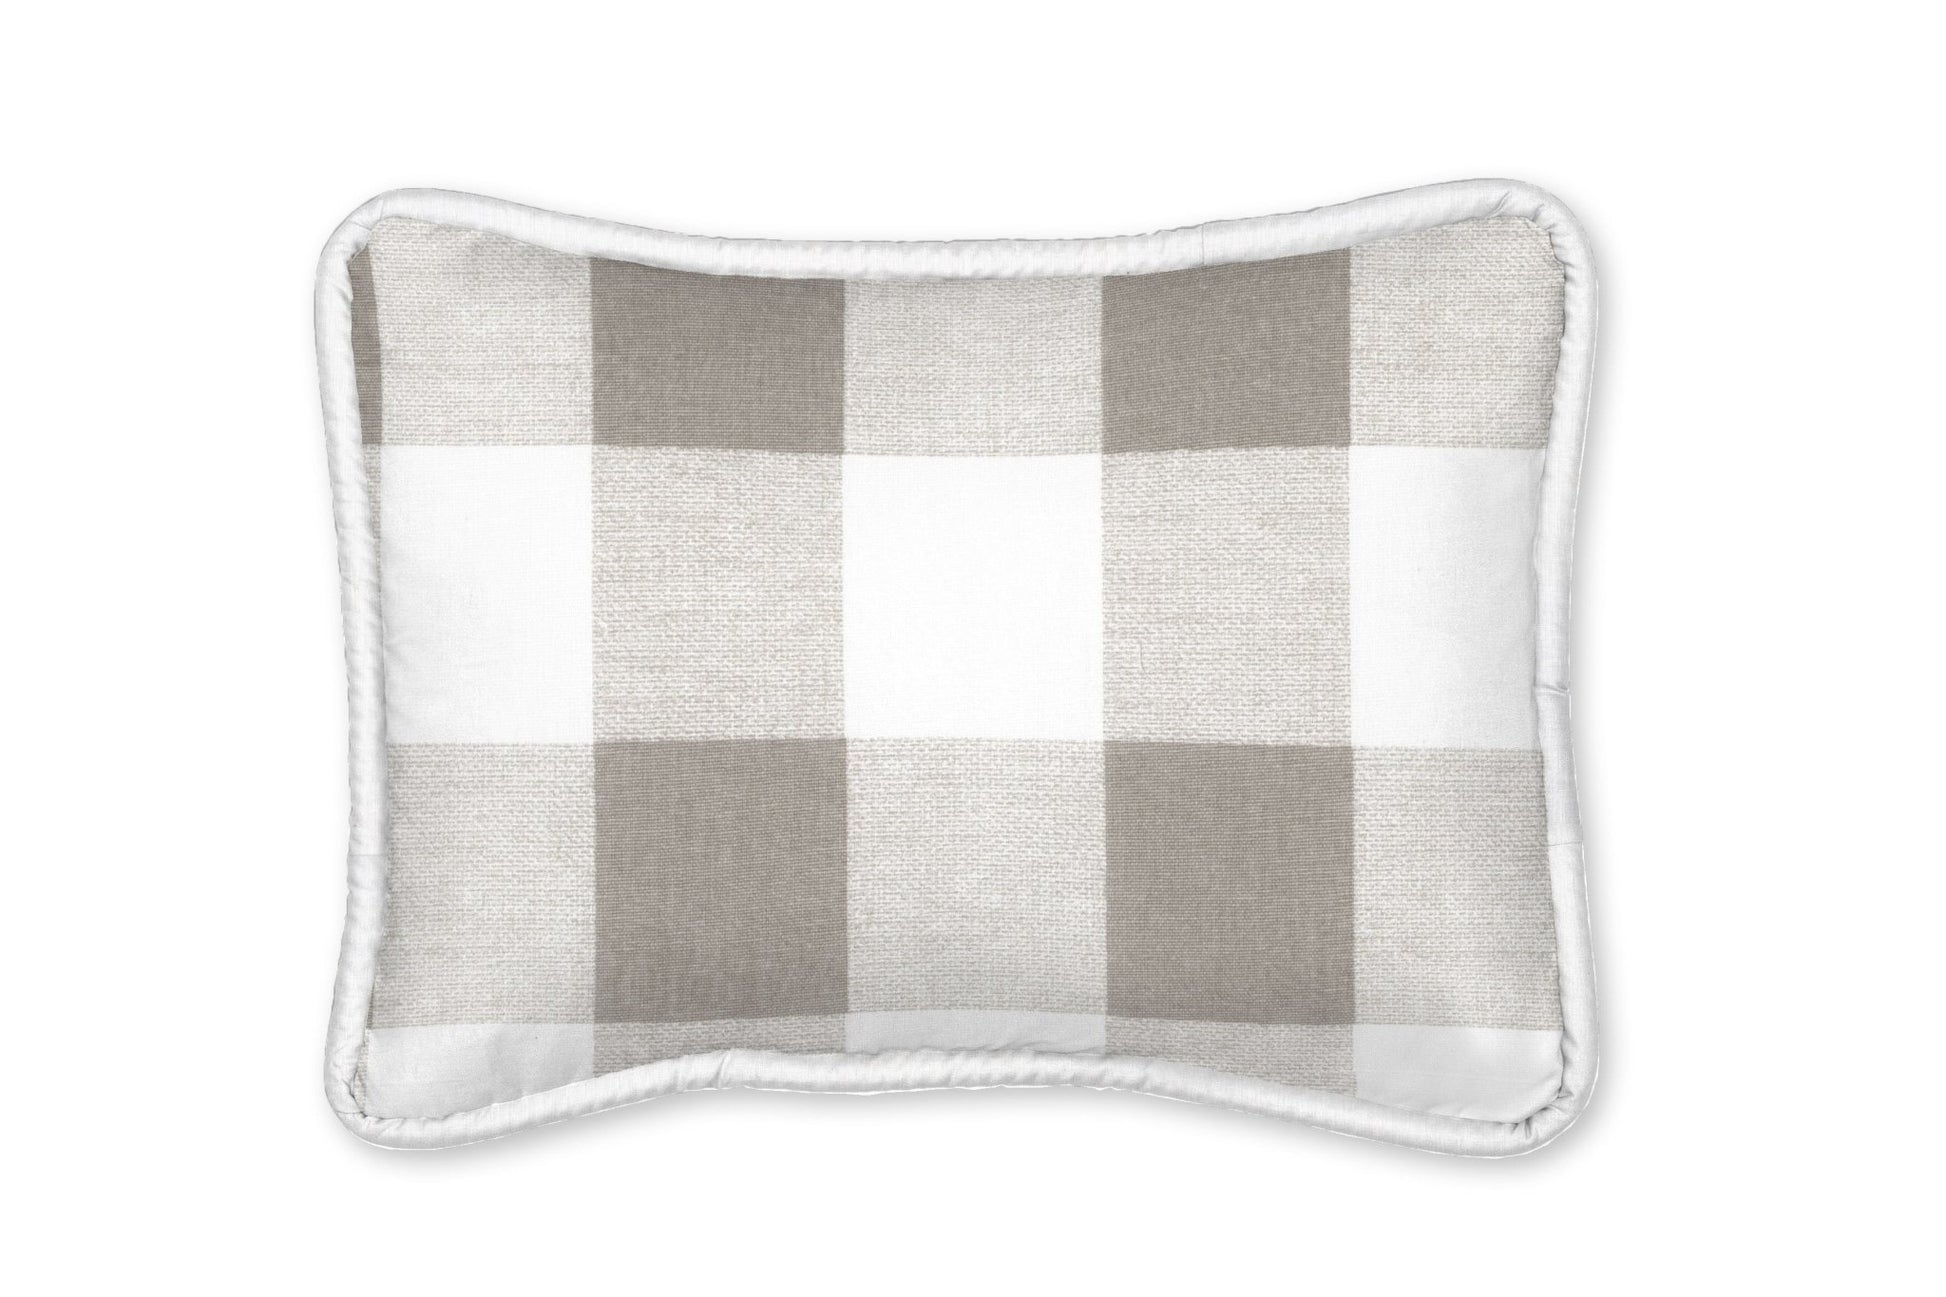 Khaki Buffalo Plaid Decorative Pillow - New Arrivals Inc